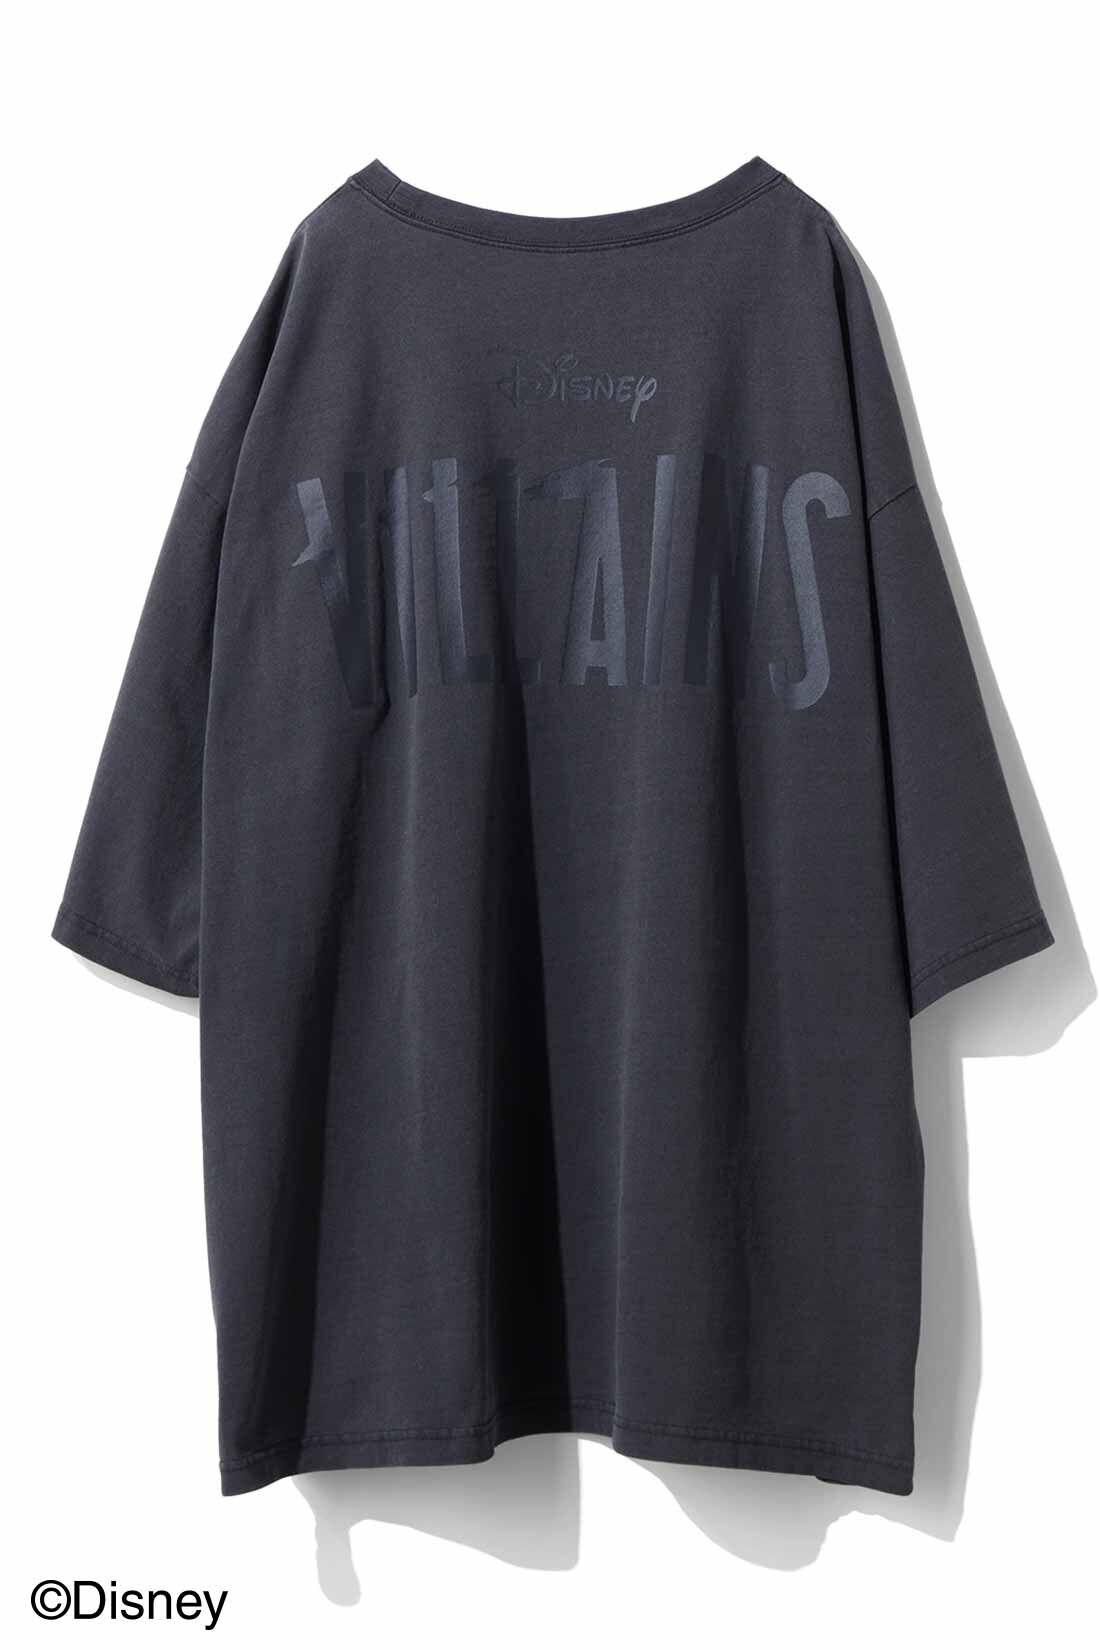 MEDE19F|MEDE19F　【Disney】古着屋でみつけたようなプリントTシャツ/ヴィランズ|身ごろと同糸色のブラックで、「VILLAINS」のロゴ。